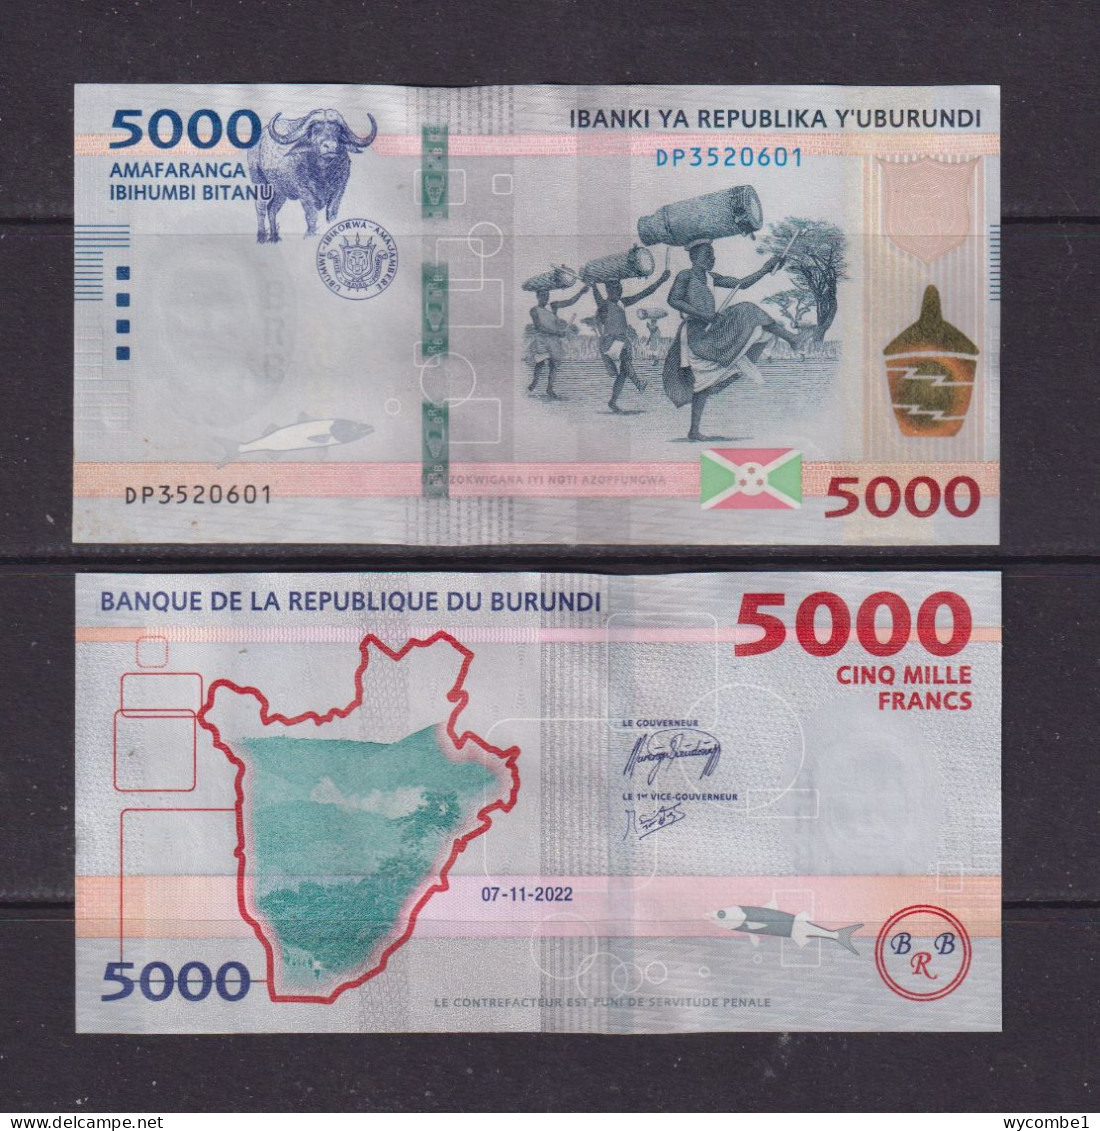 BURUNDI -  2022 5000 Francs UNC Banknote - Burundi